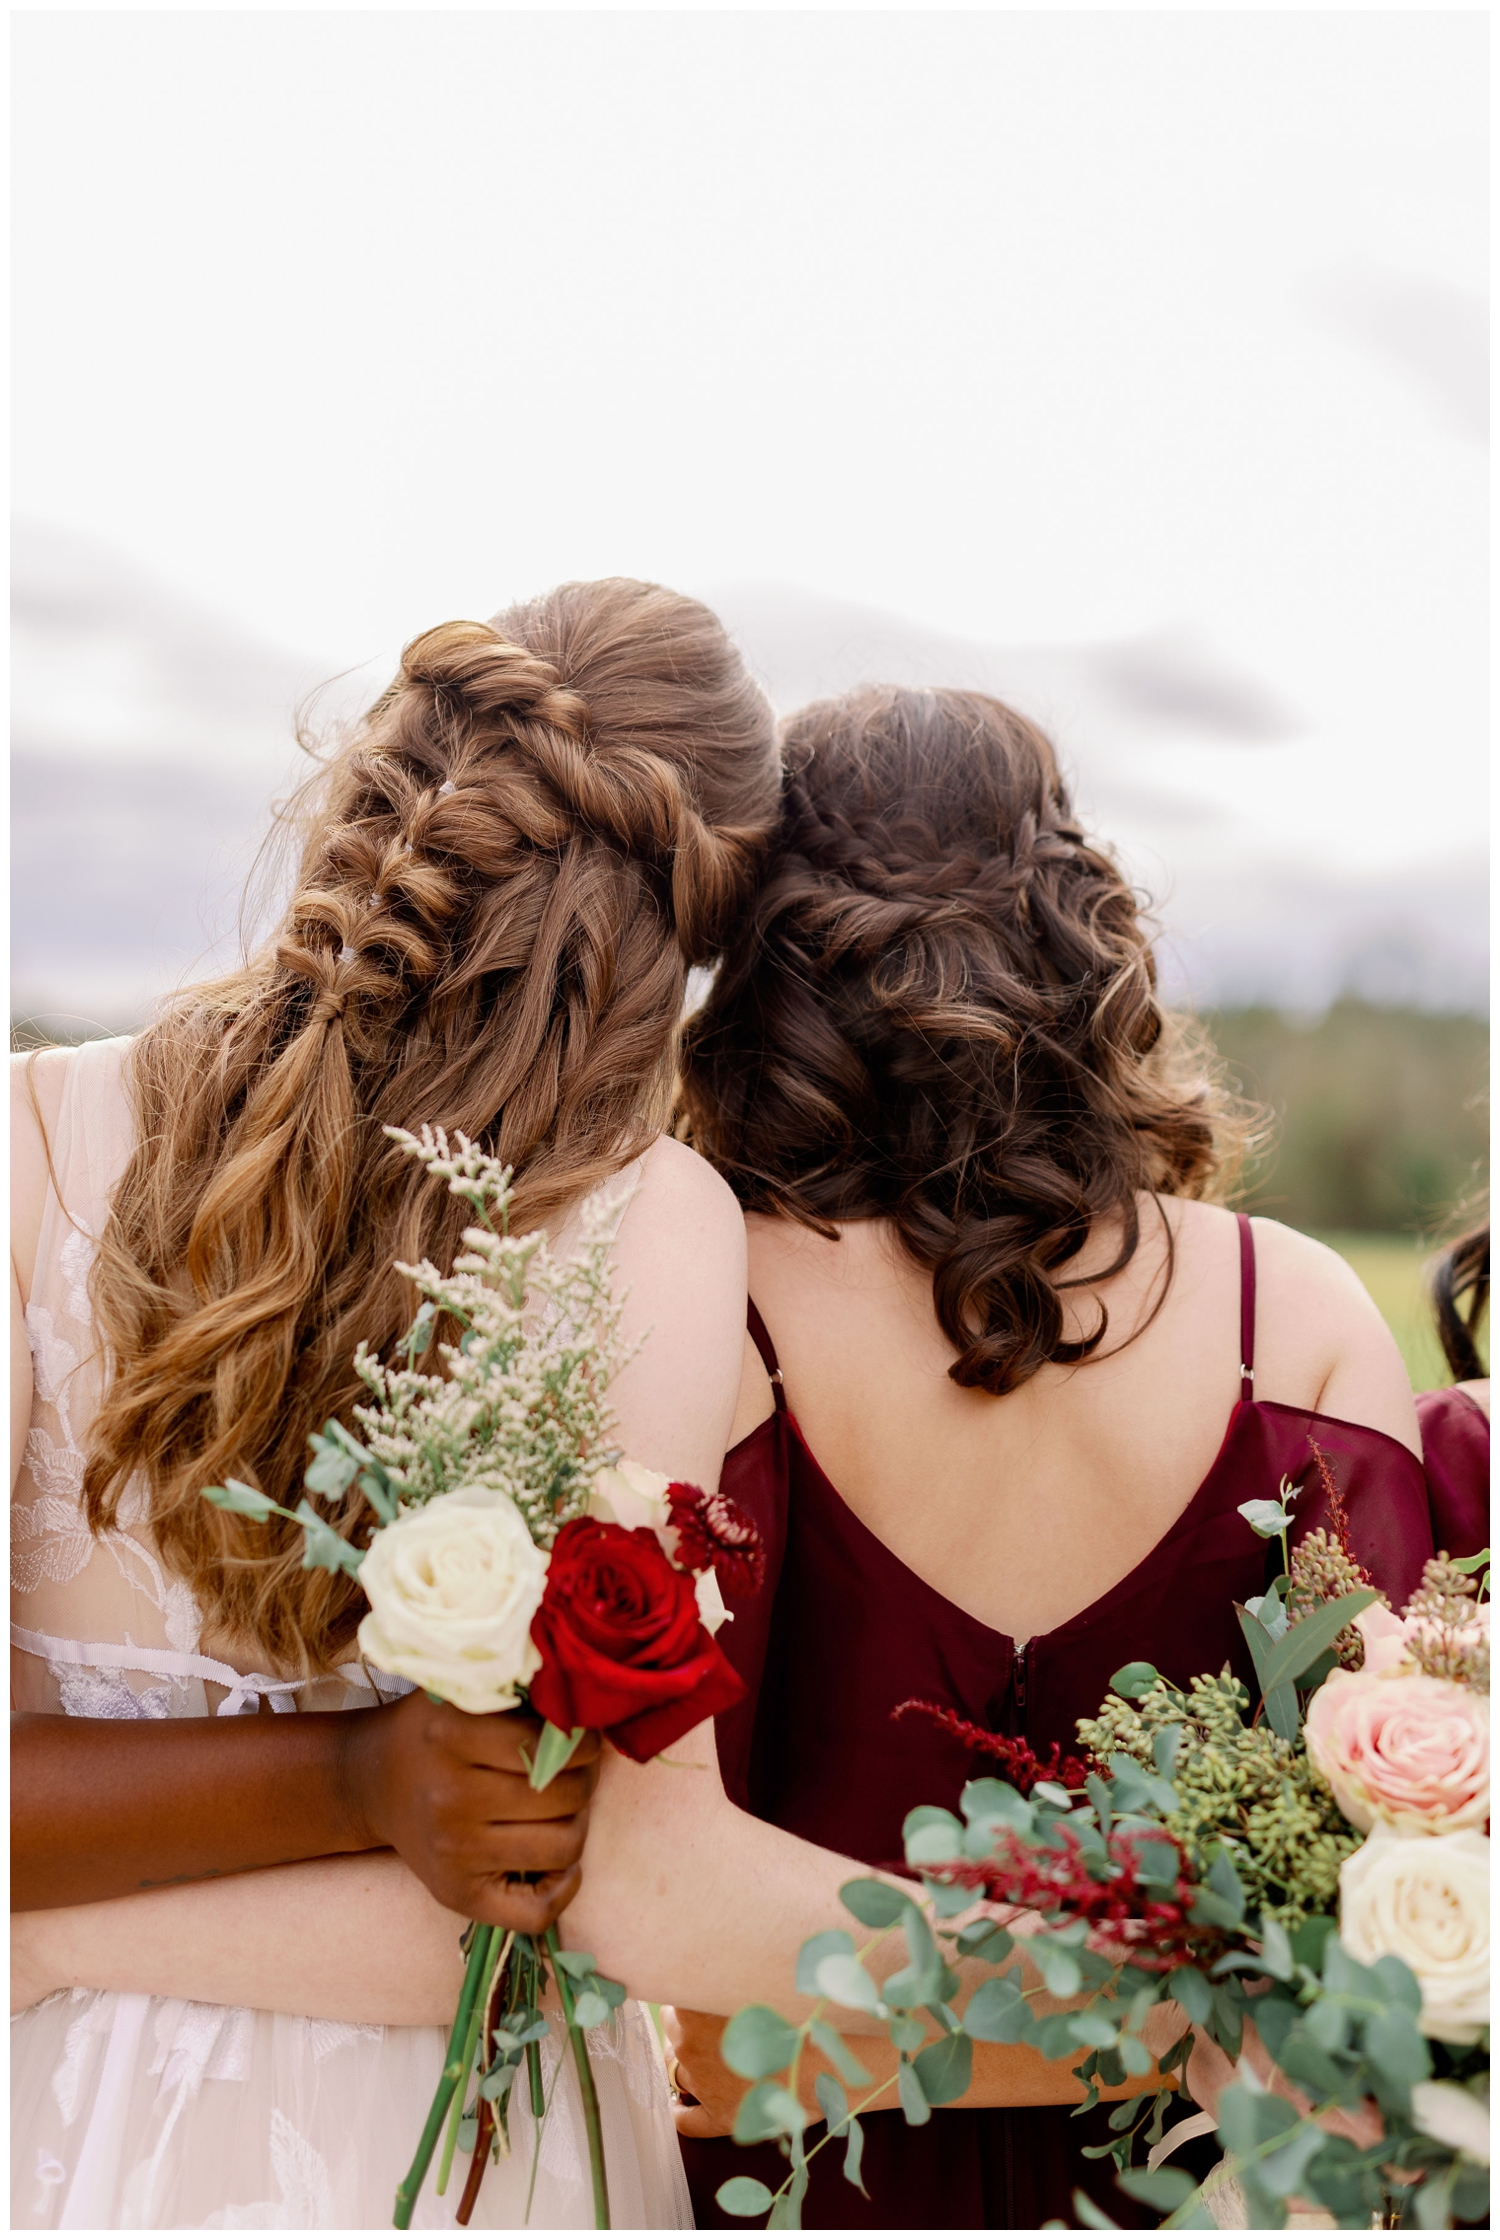 bride and bridesmaid hugging image from behind